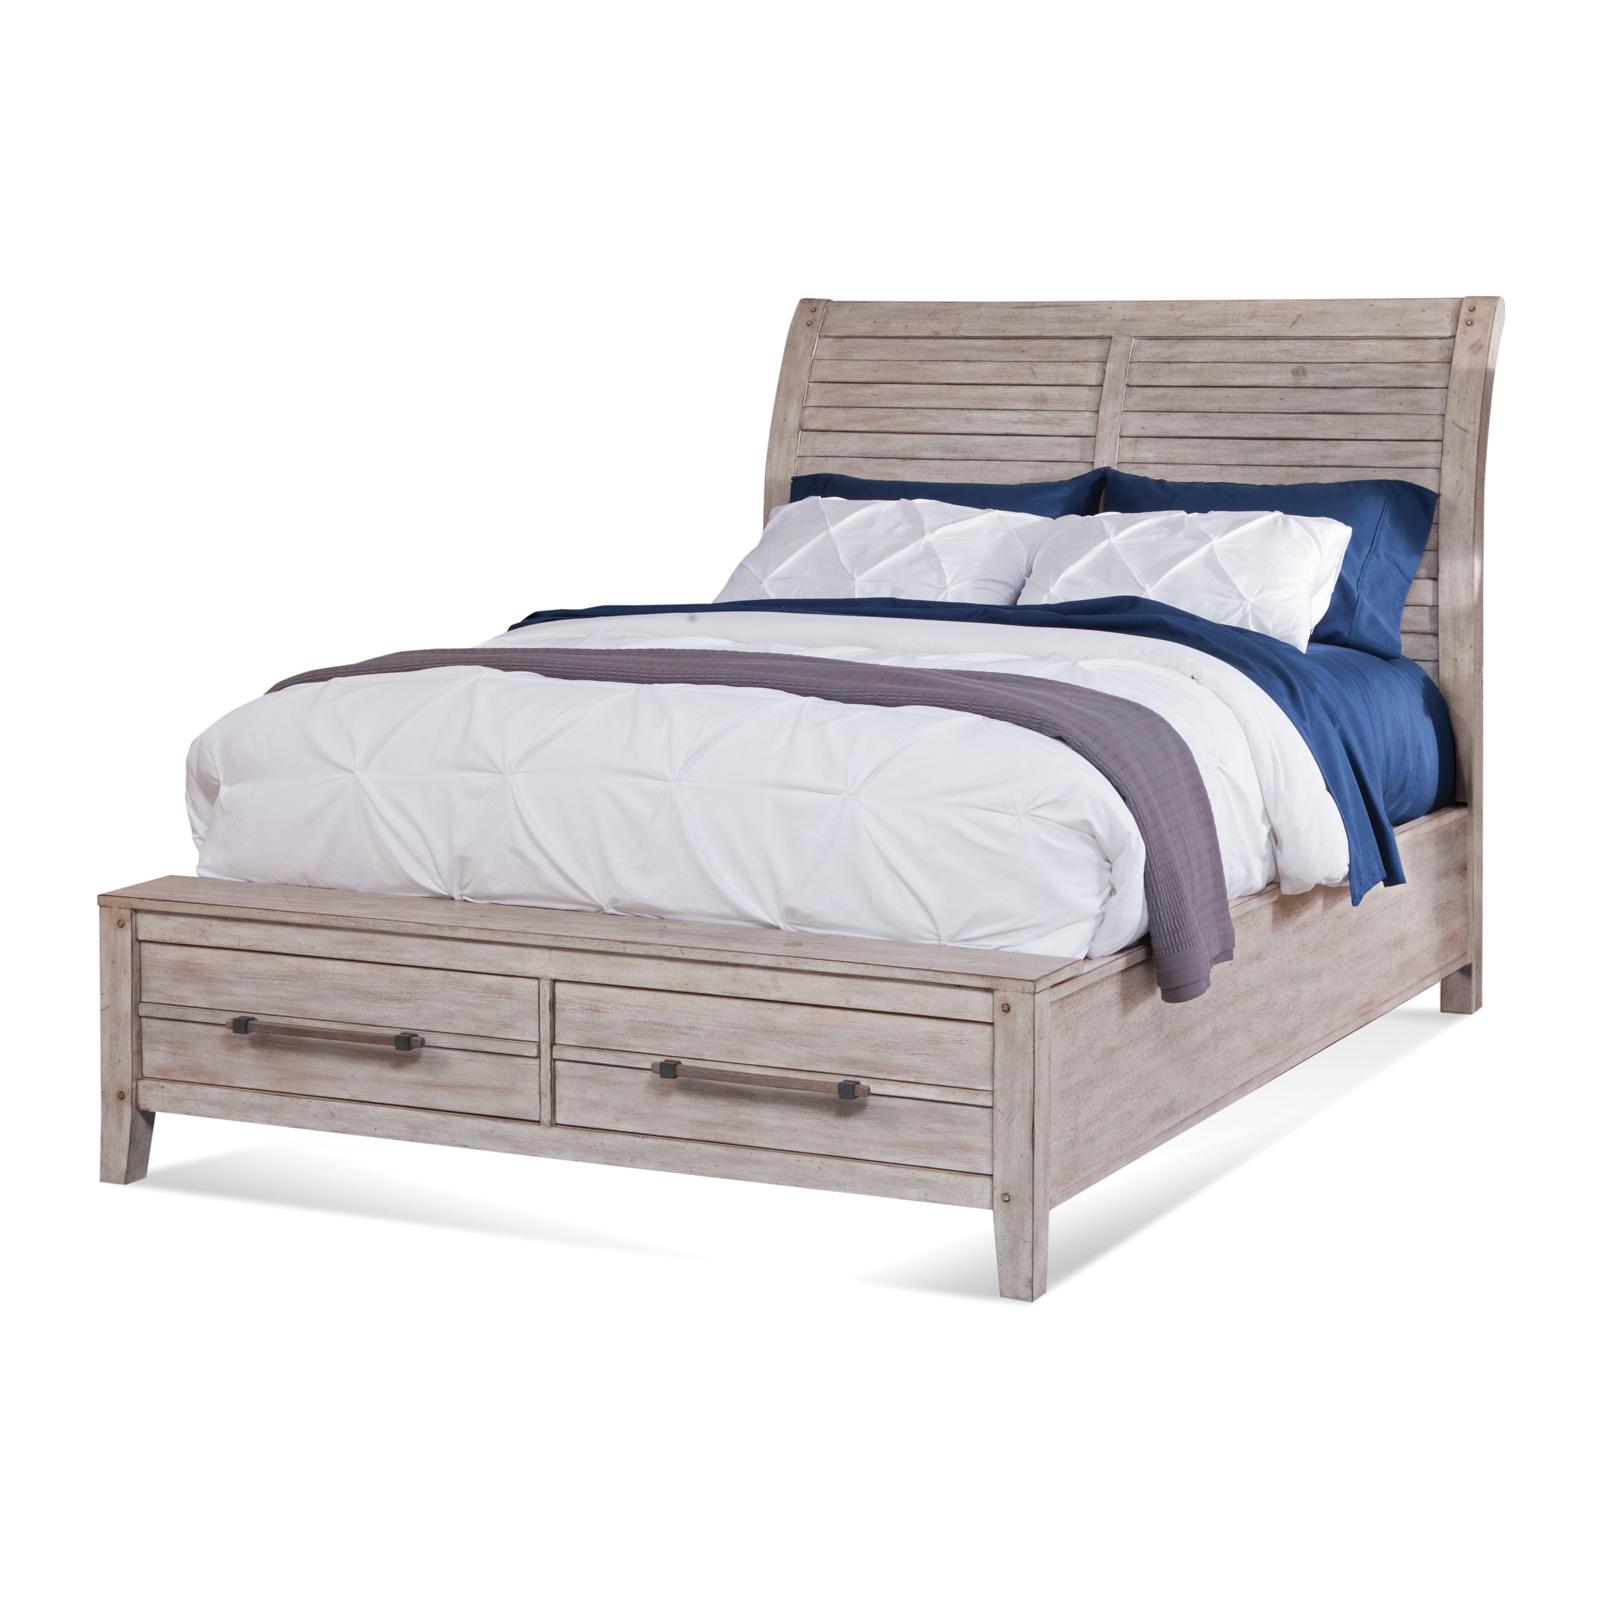 Classic, Traditional Sleigh Bed AURORA 2810-66PSB 2810-66SLST in whitewash 